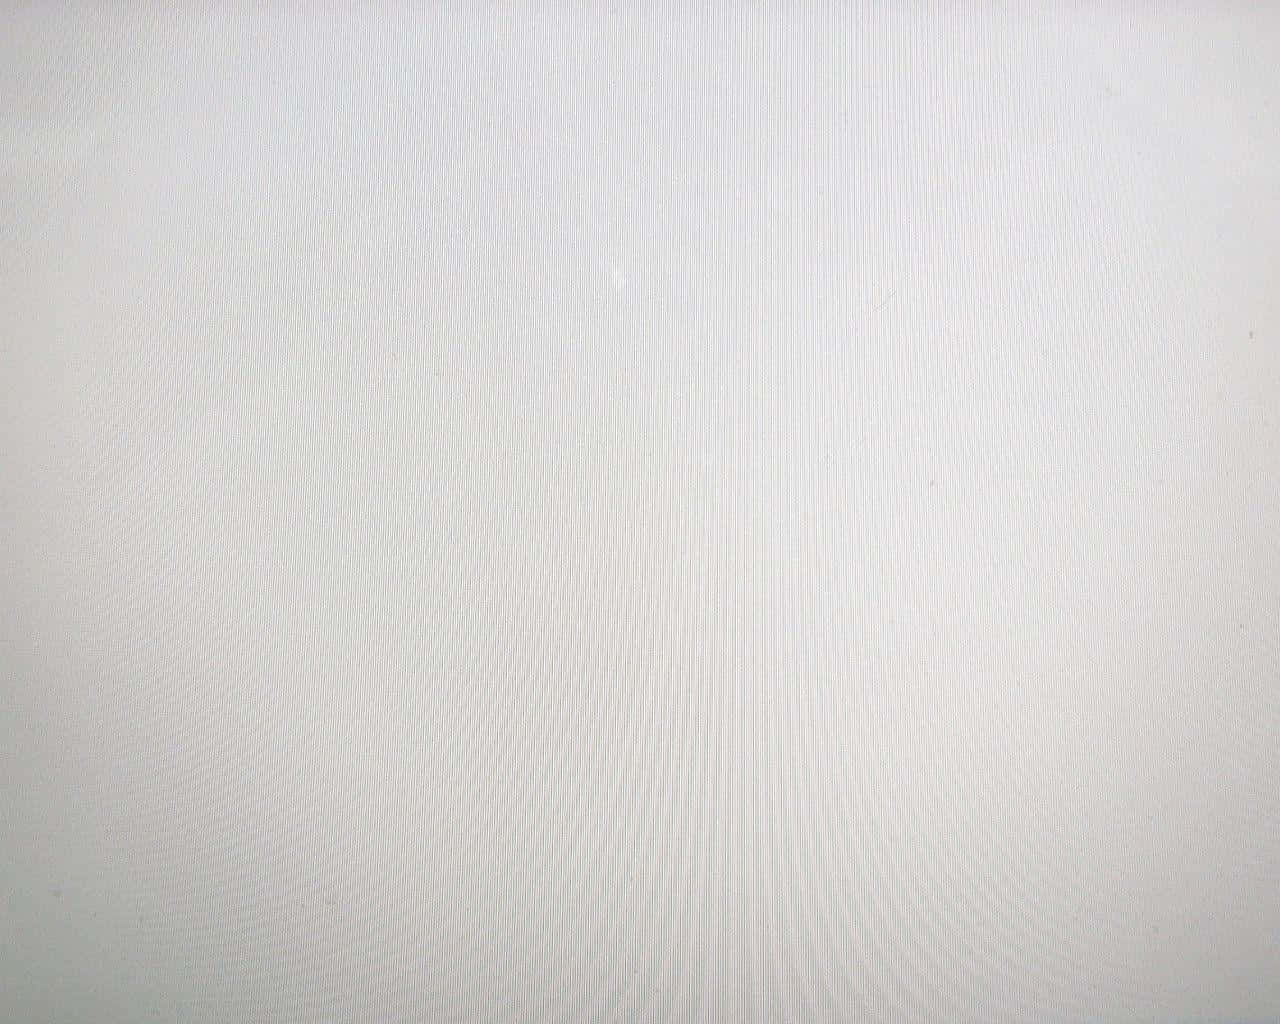 Minimalist White Screen Background